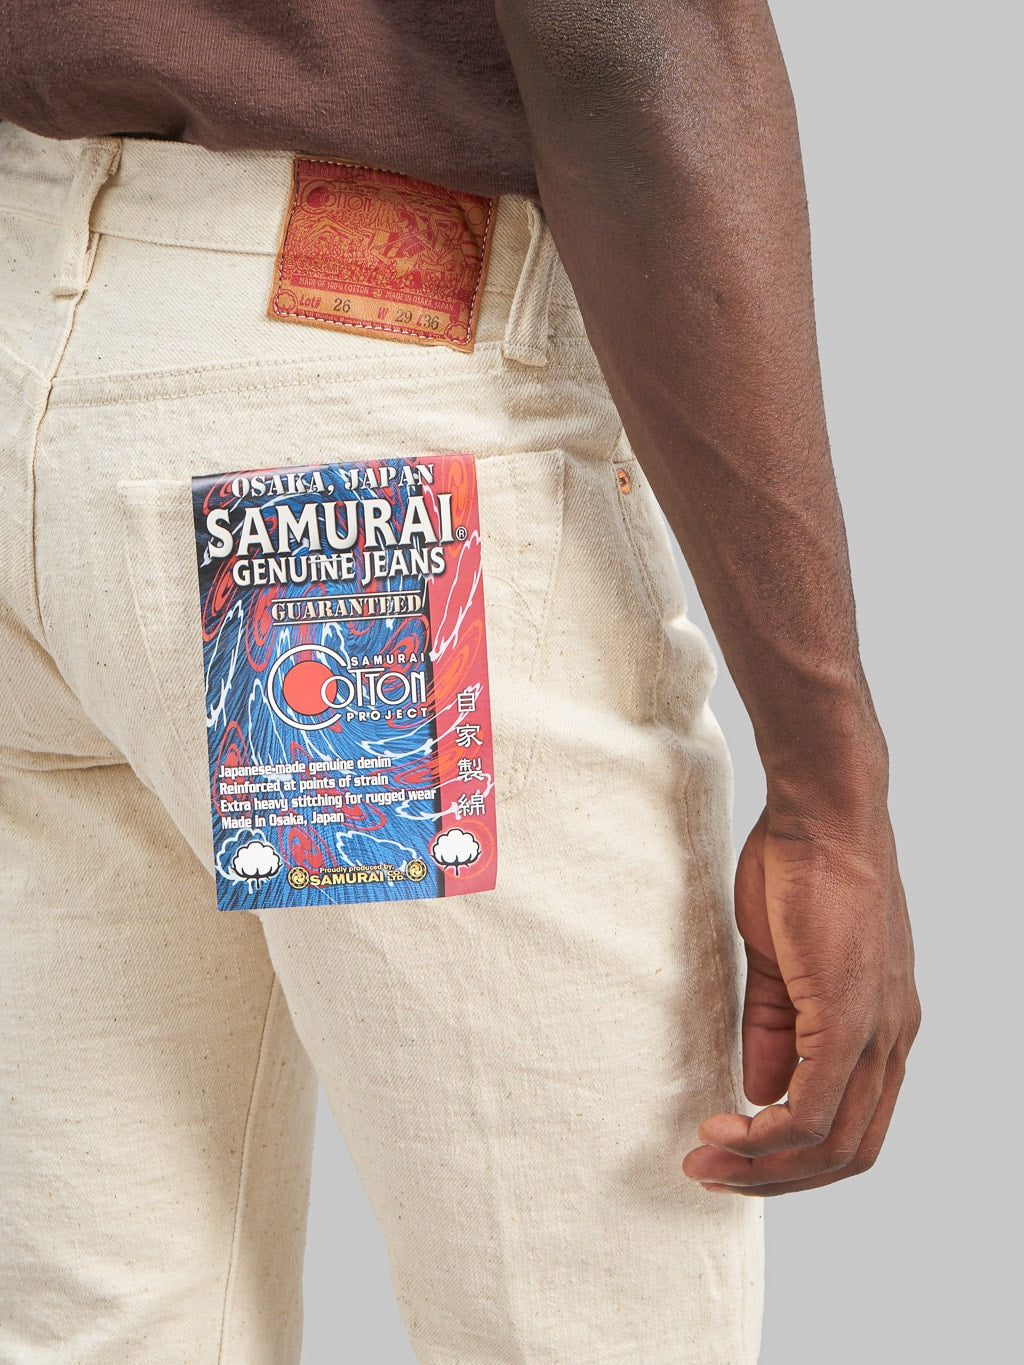 Samurai Jeans Japanese Cotton Ecru Jeans slim straight flasher pocket